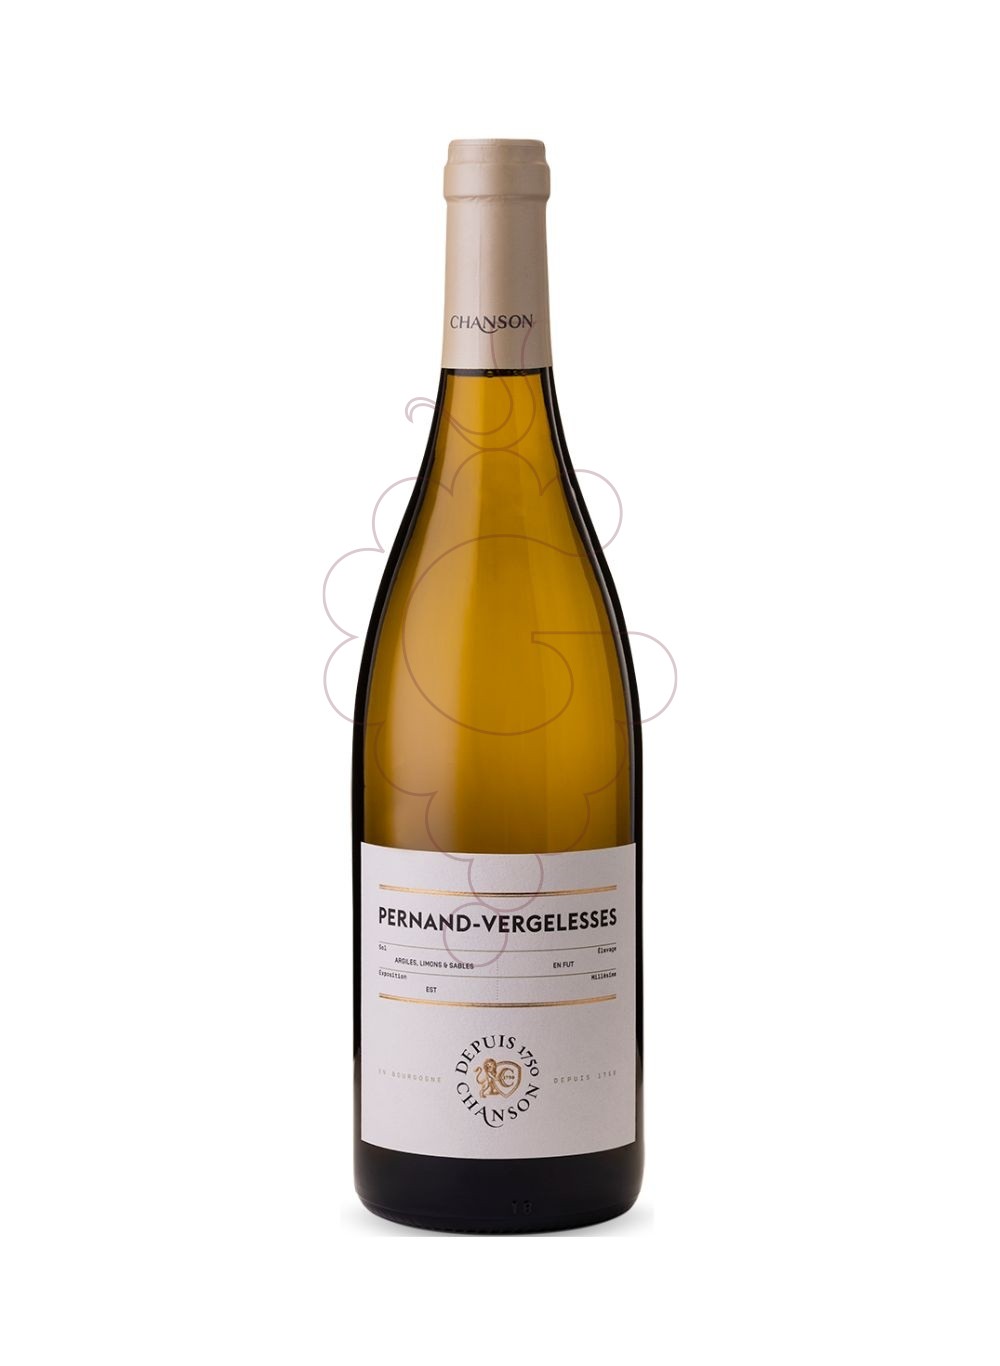 Photo Chanson Pernand-Vergelesses Chardonnay white wine